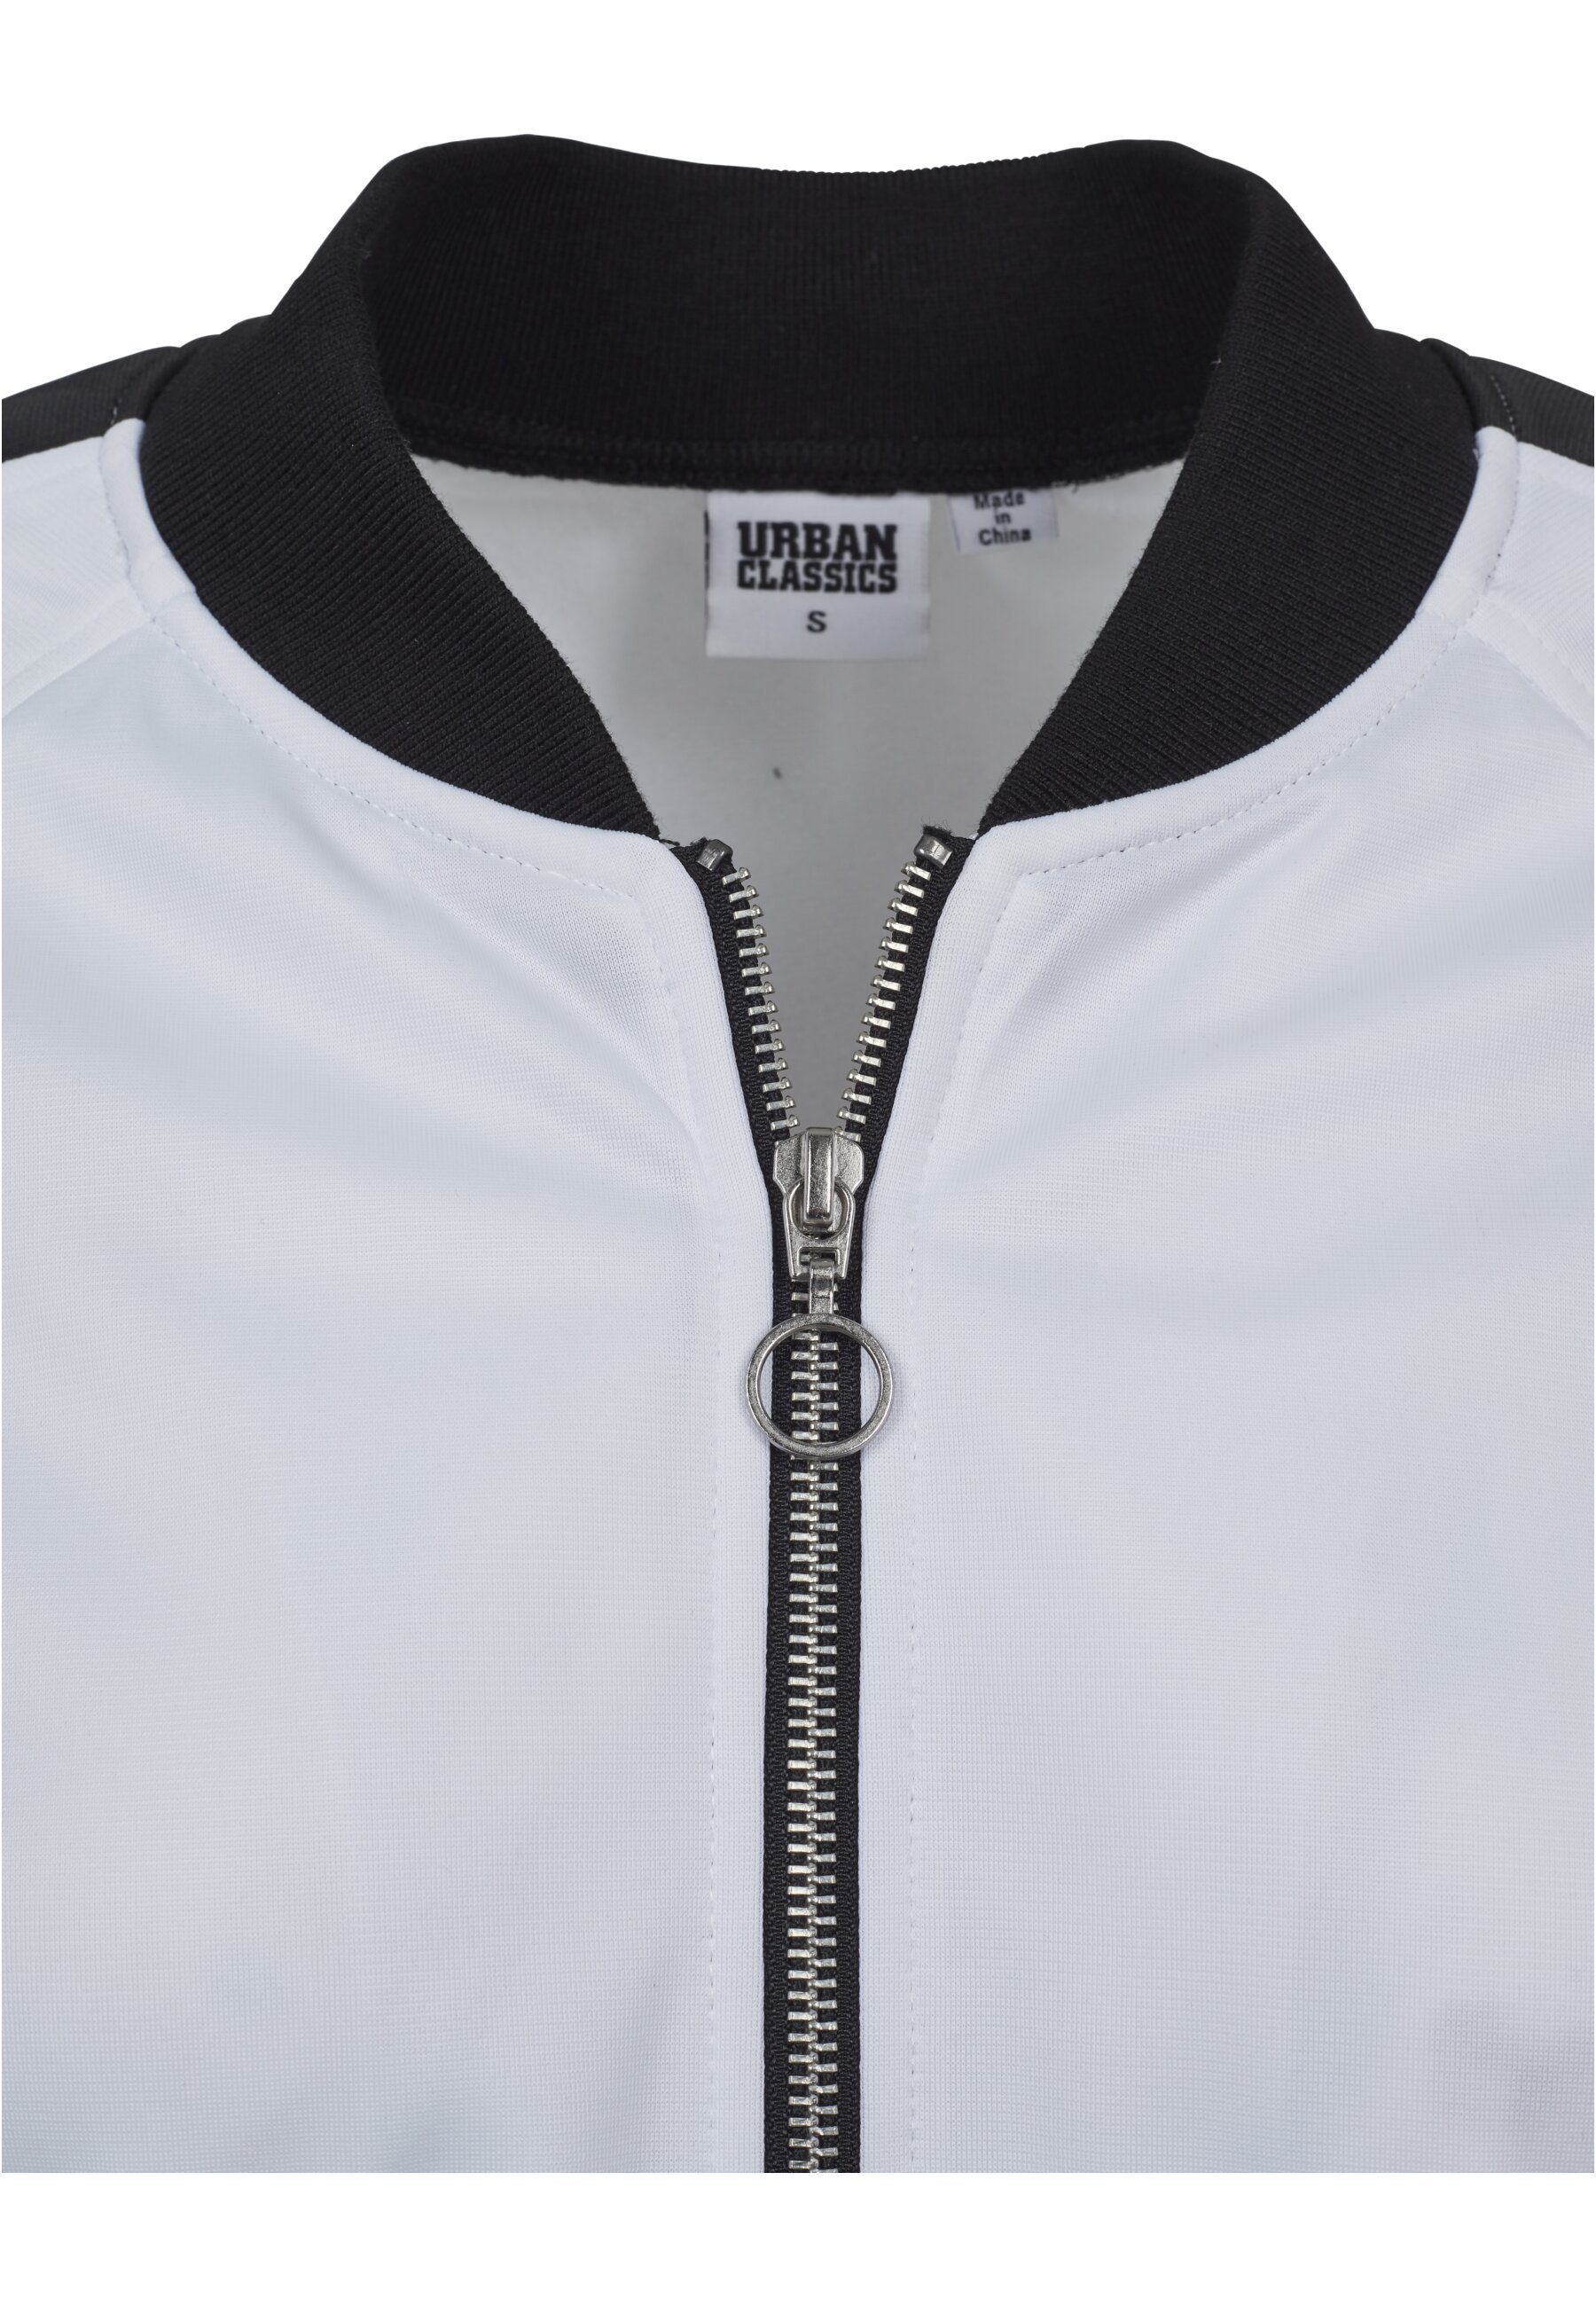 Up Ladies CLASSICS Damen Button URBAN (1-St) white/black/white Jacket Strickfleecejacke Track